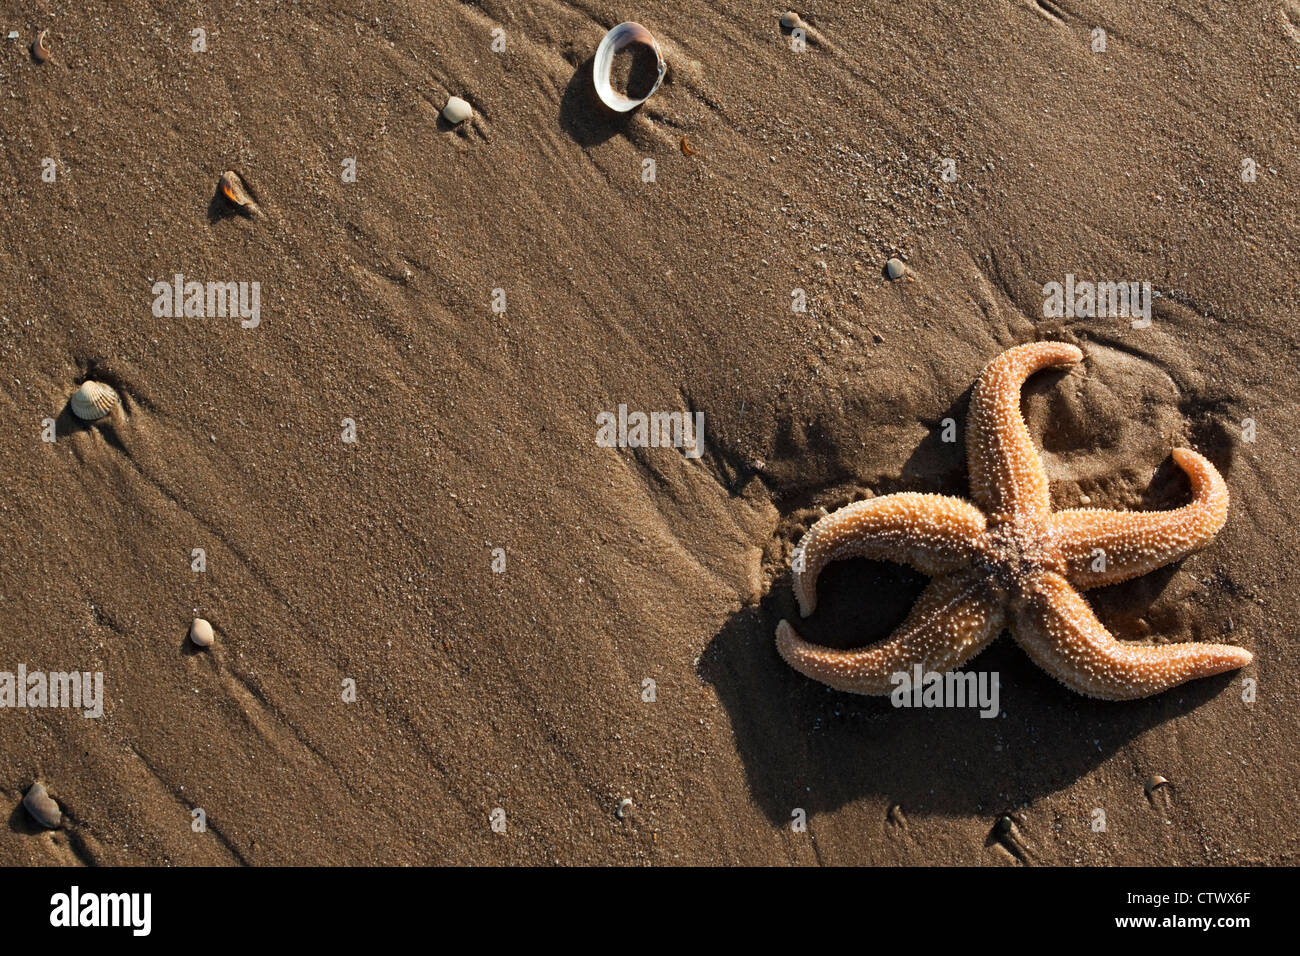 Common Starfish on a beach Stock Photo